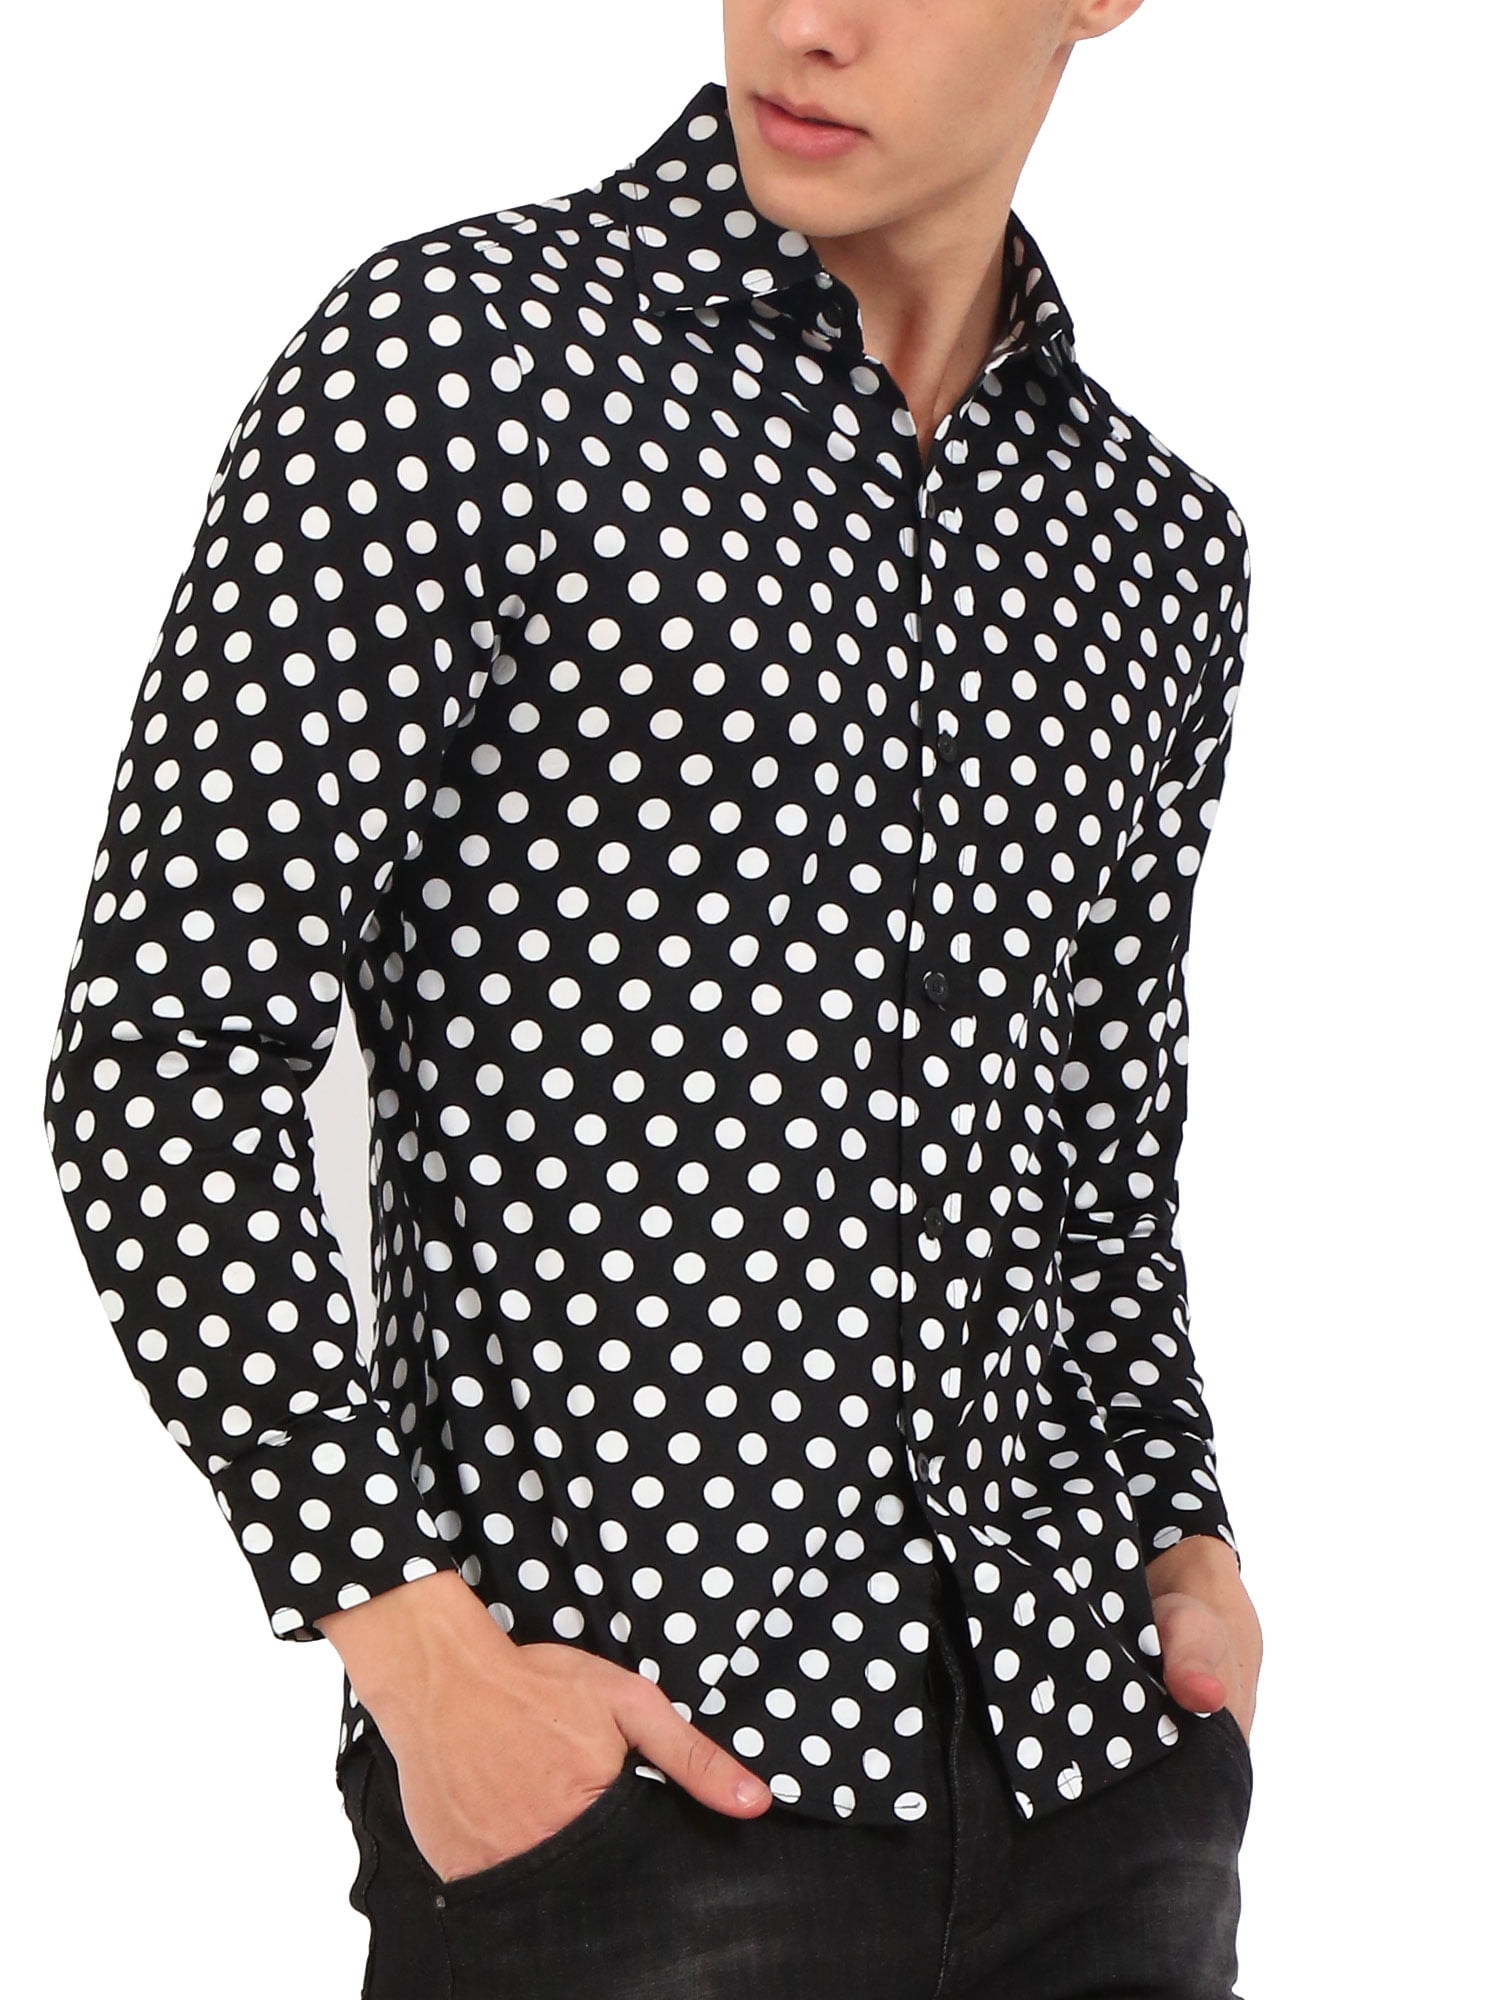 Men's polka dot shirt